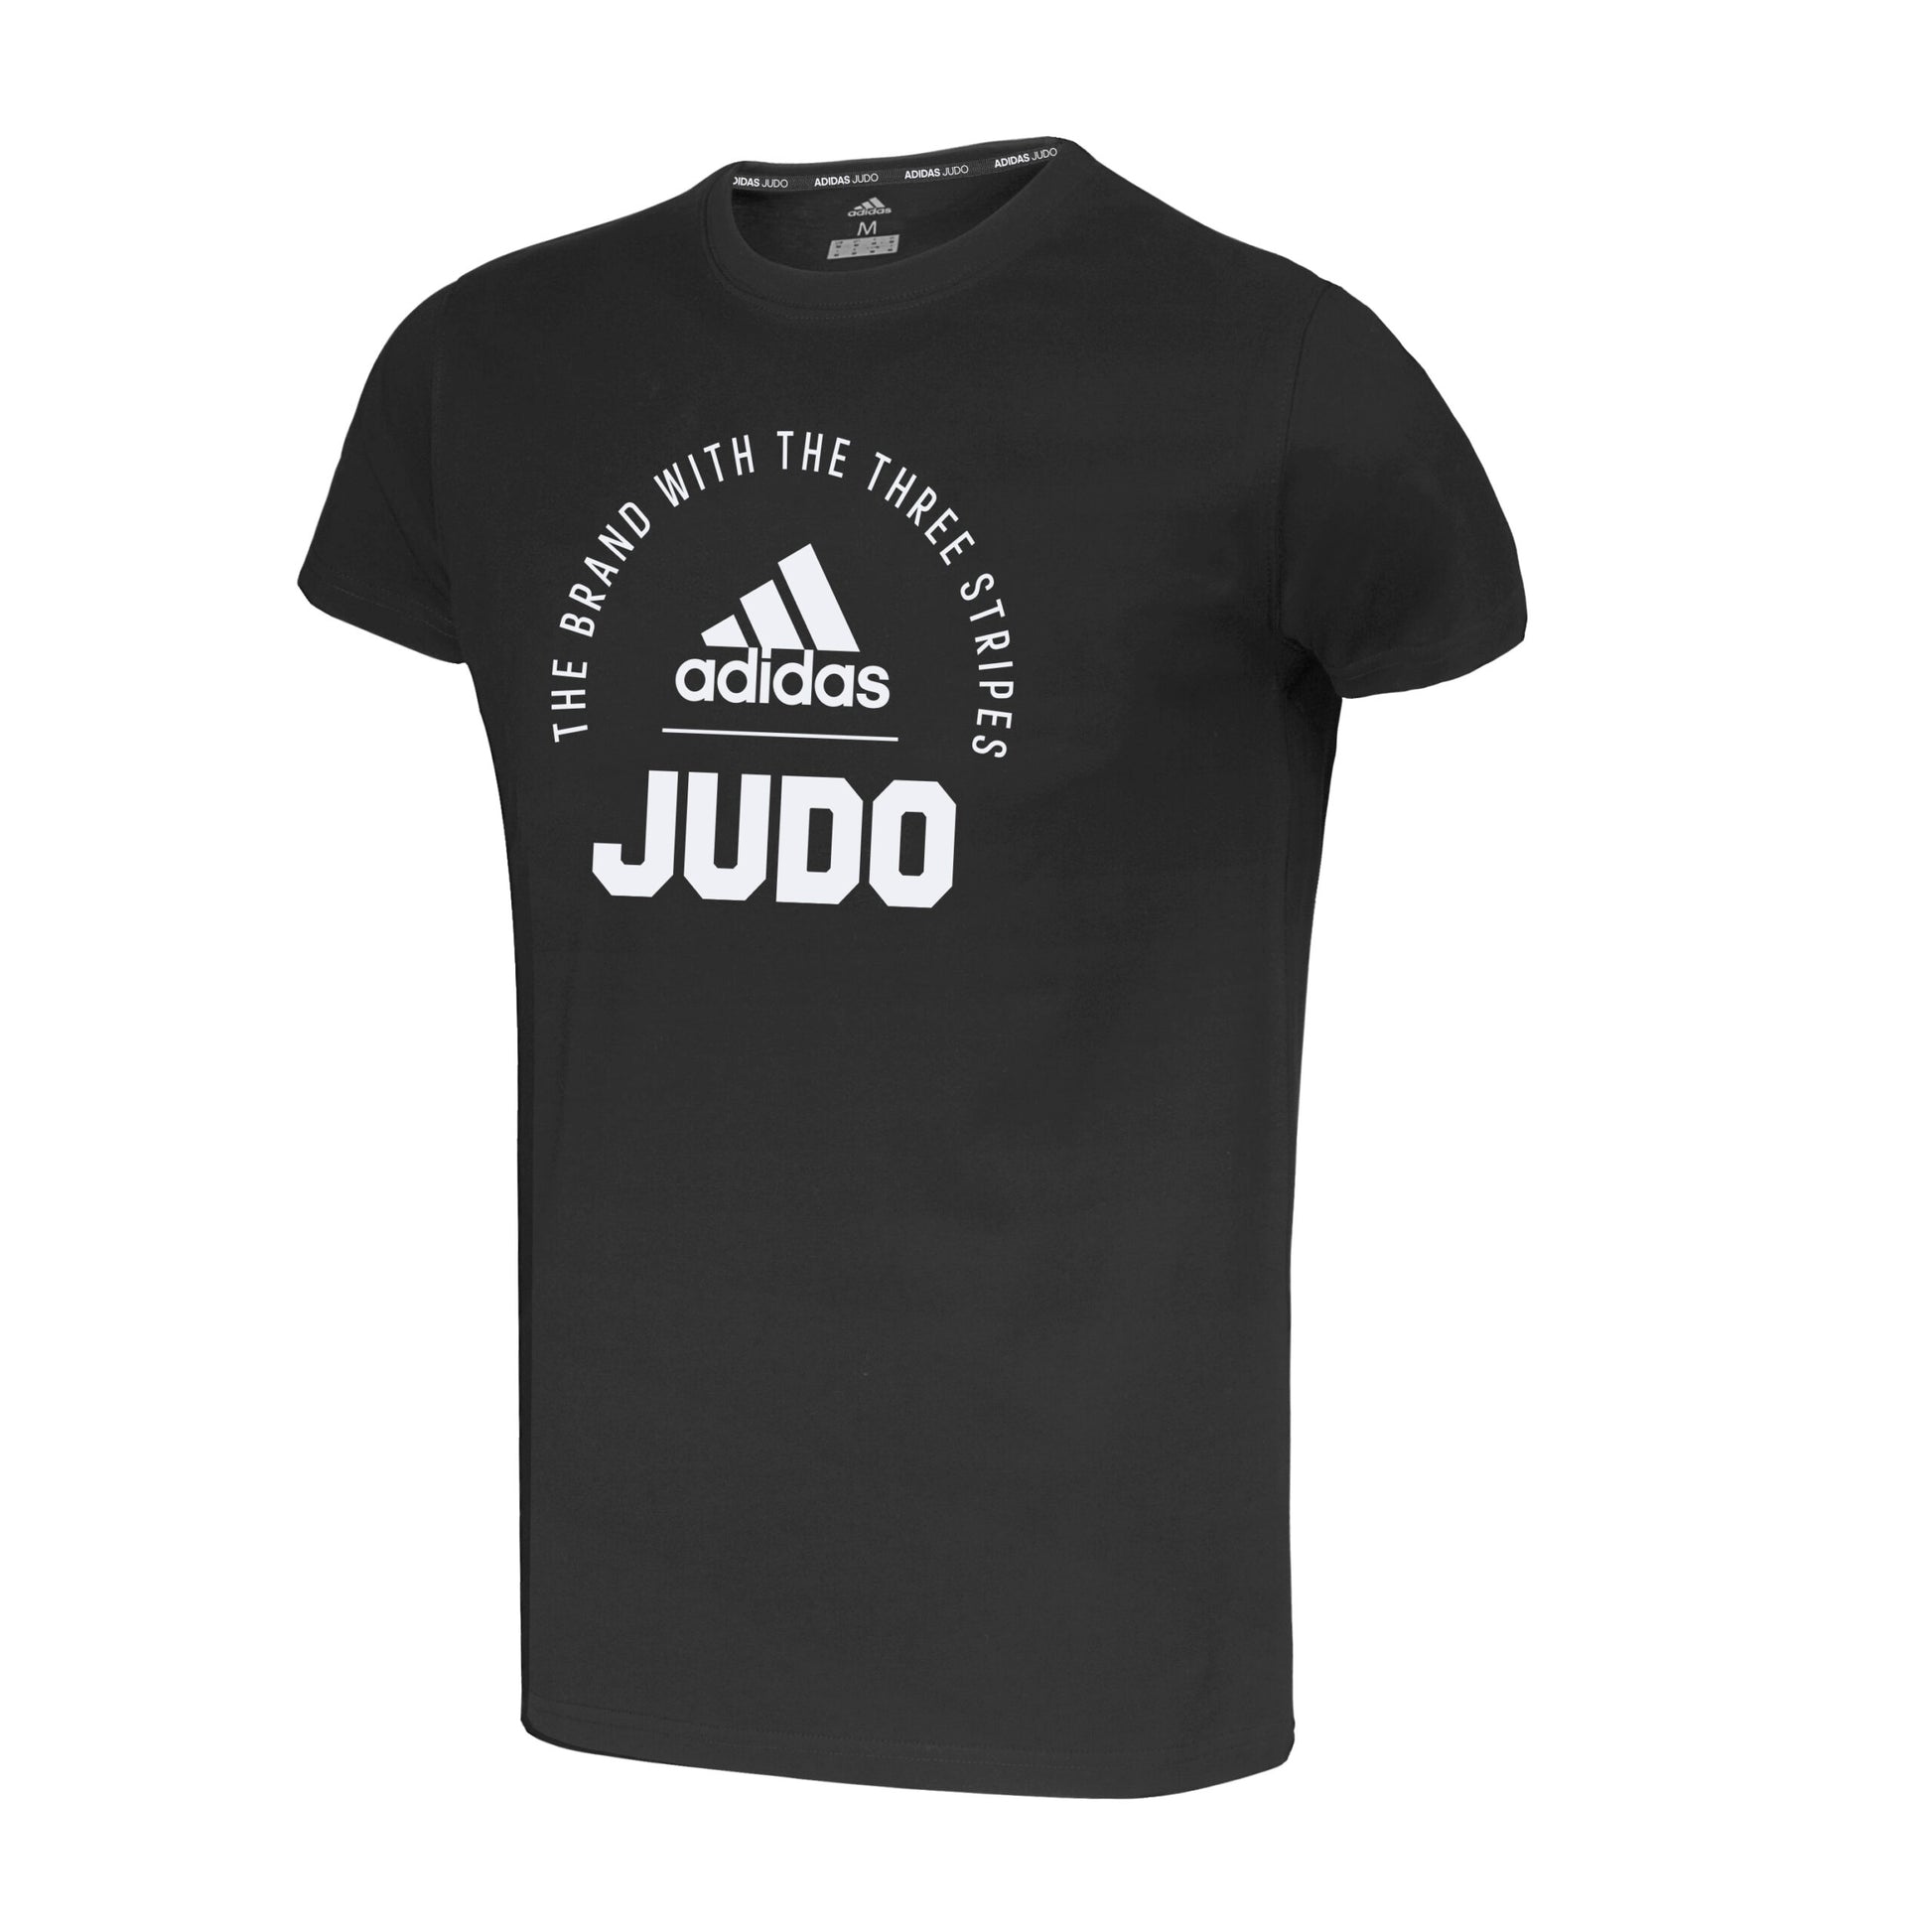 Clts21 J Adidas Judo T Shirt Black 02